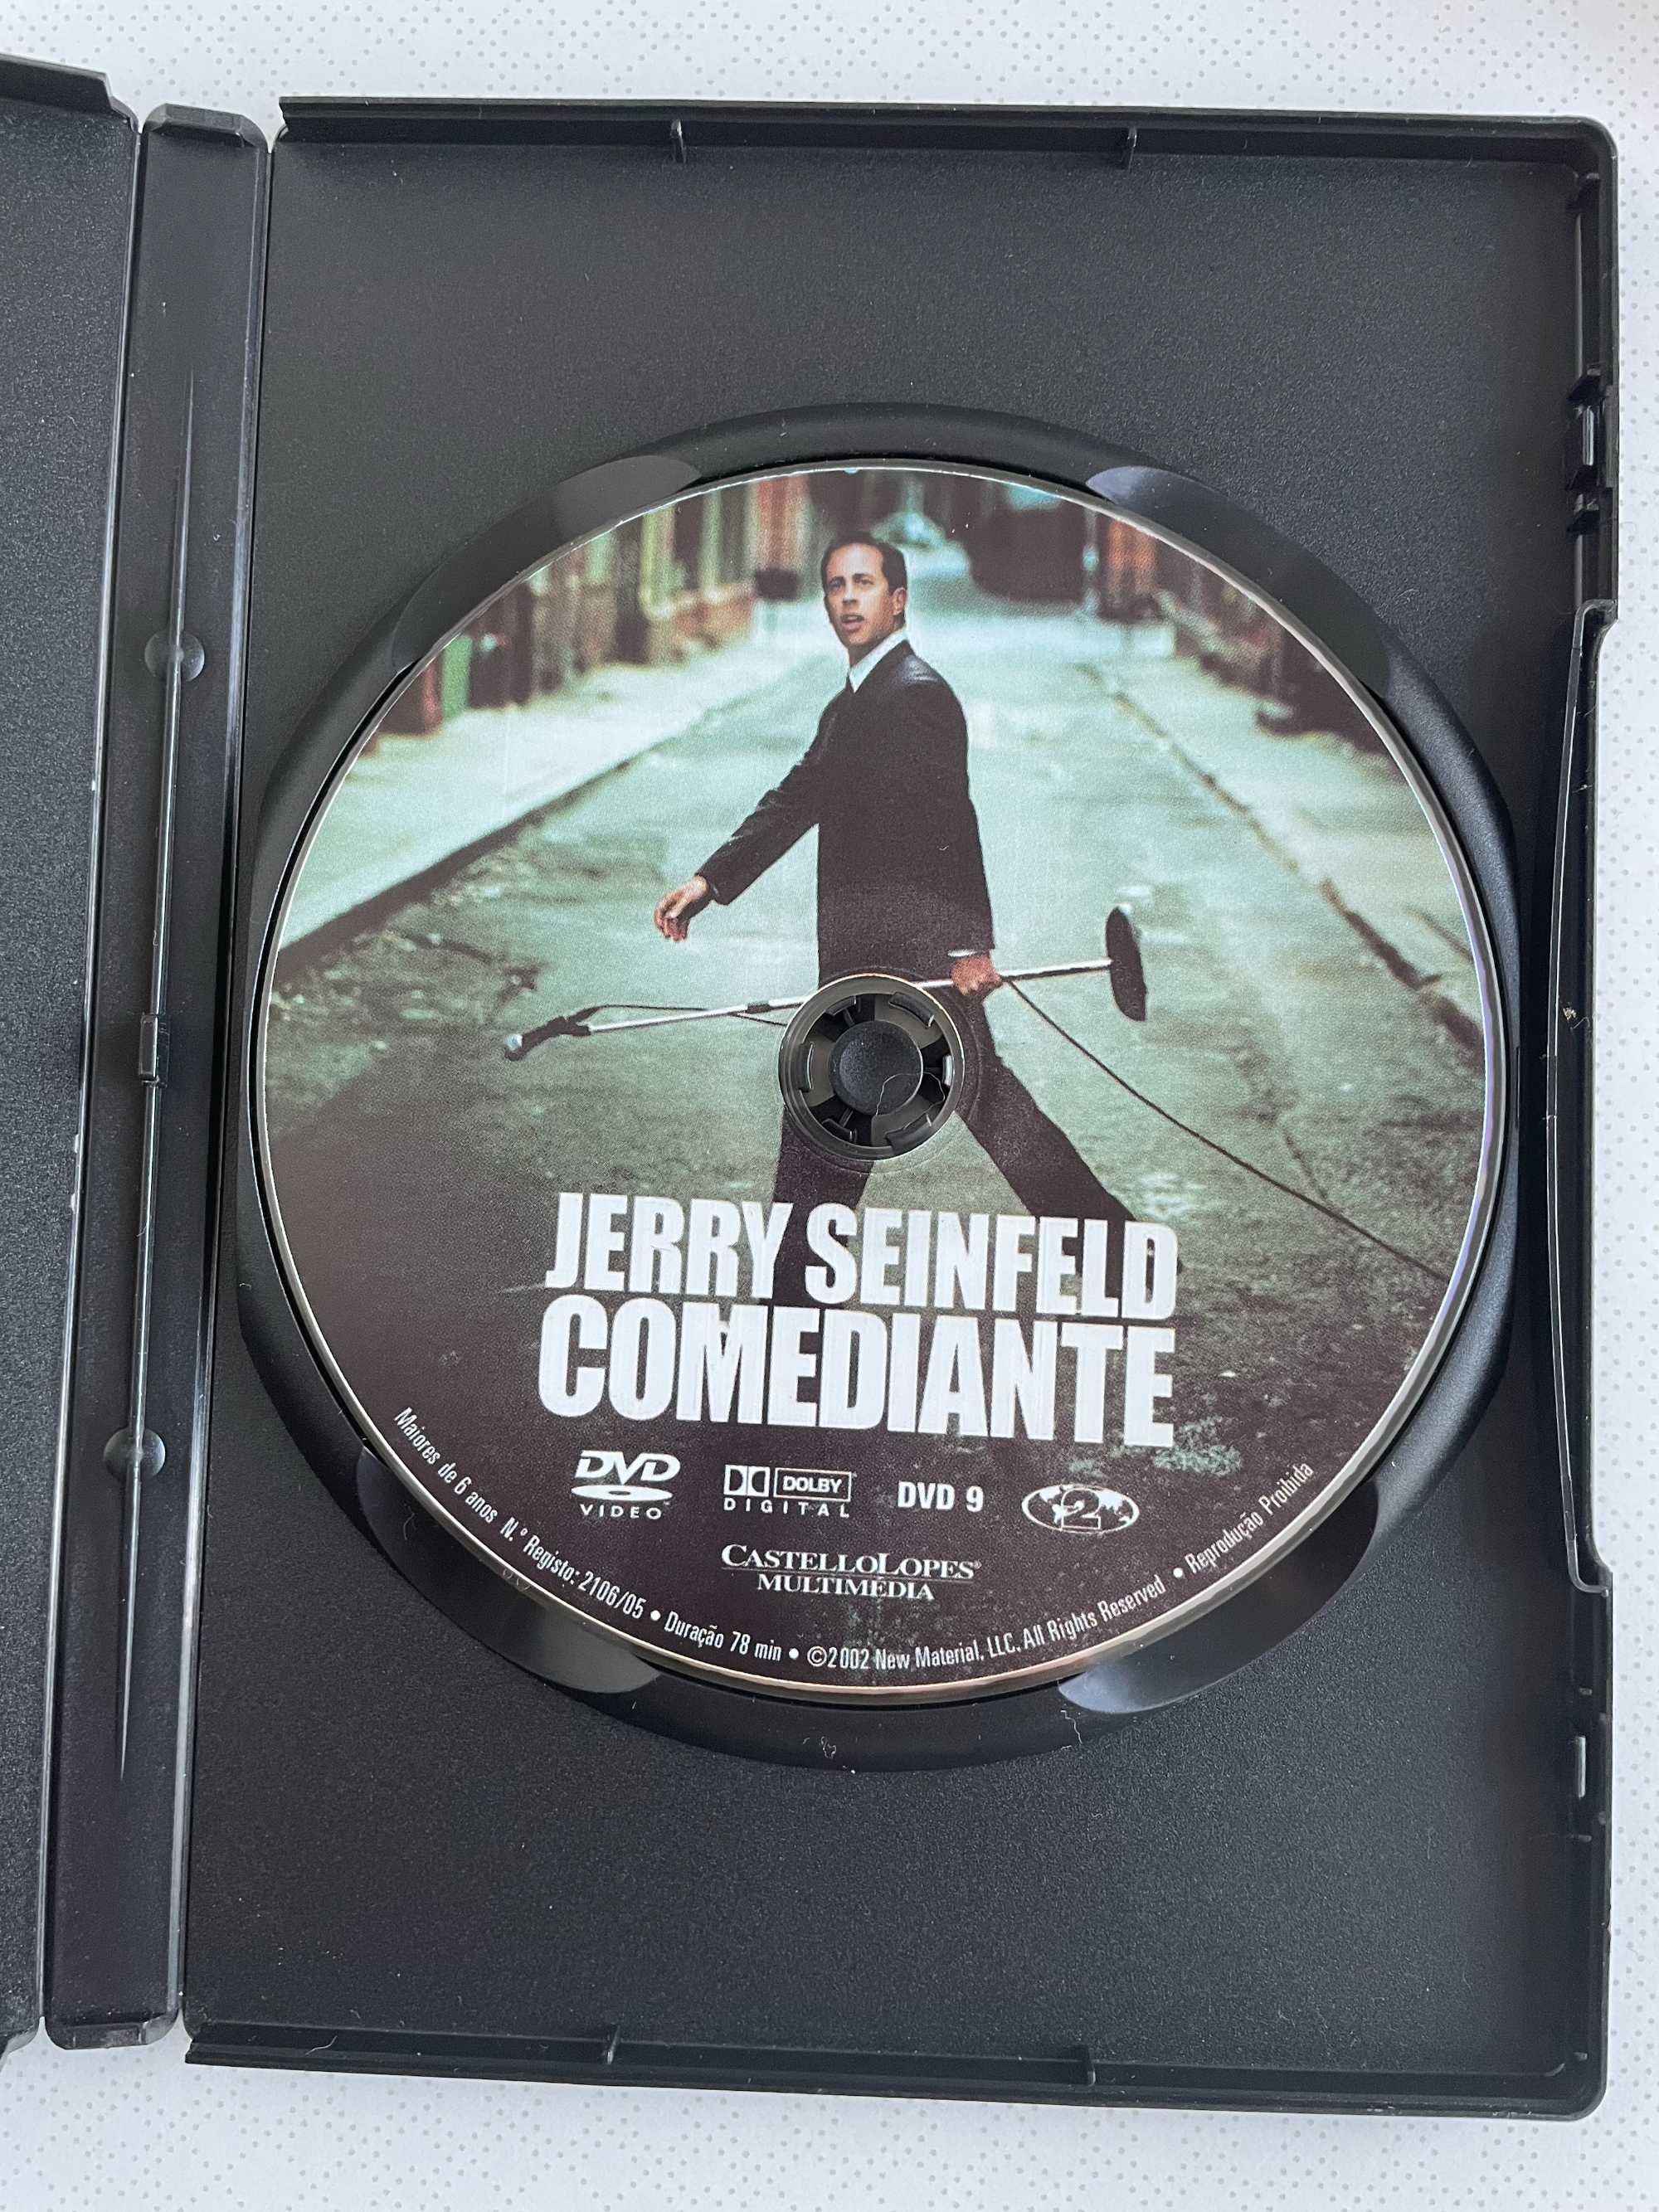 Jerry Seinfeld comediante / Comedian